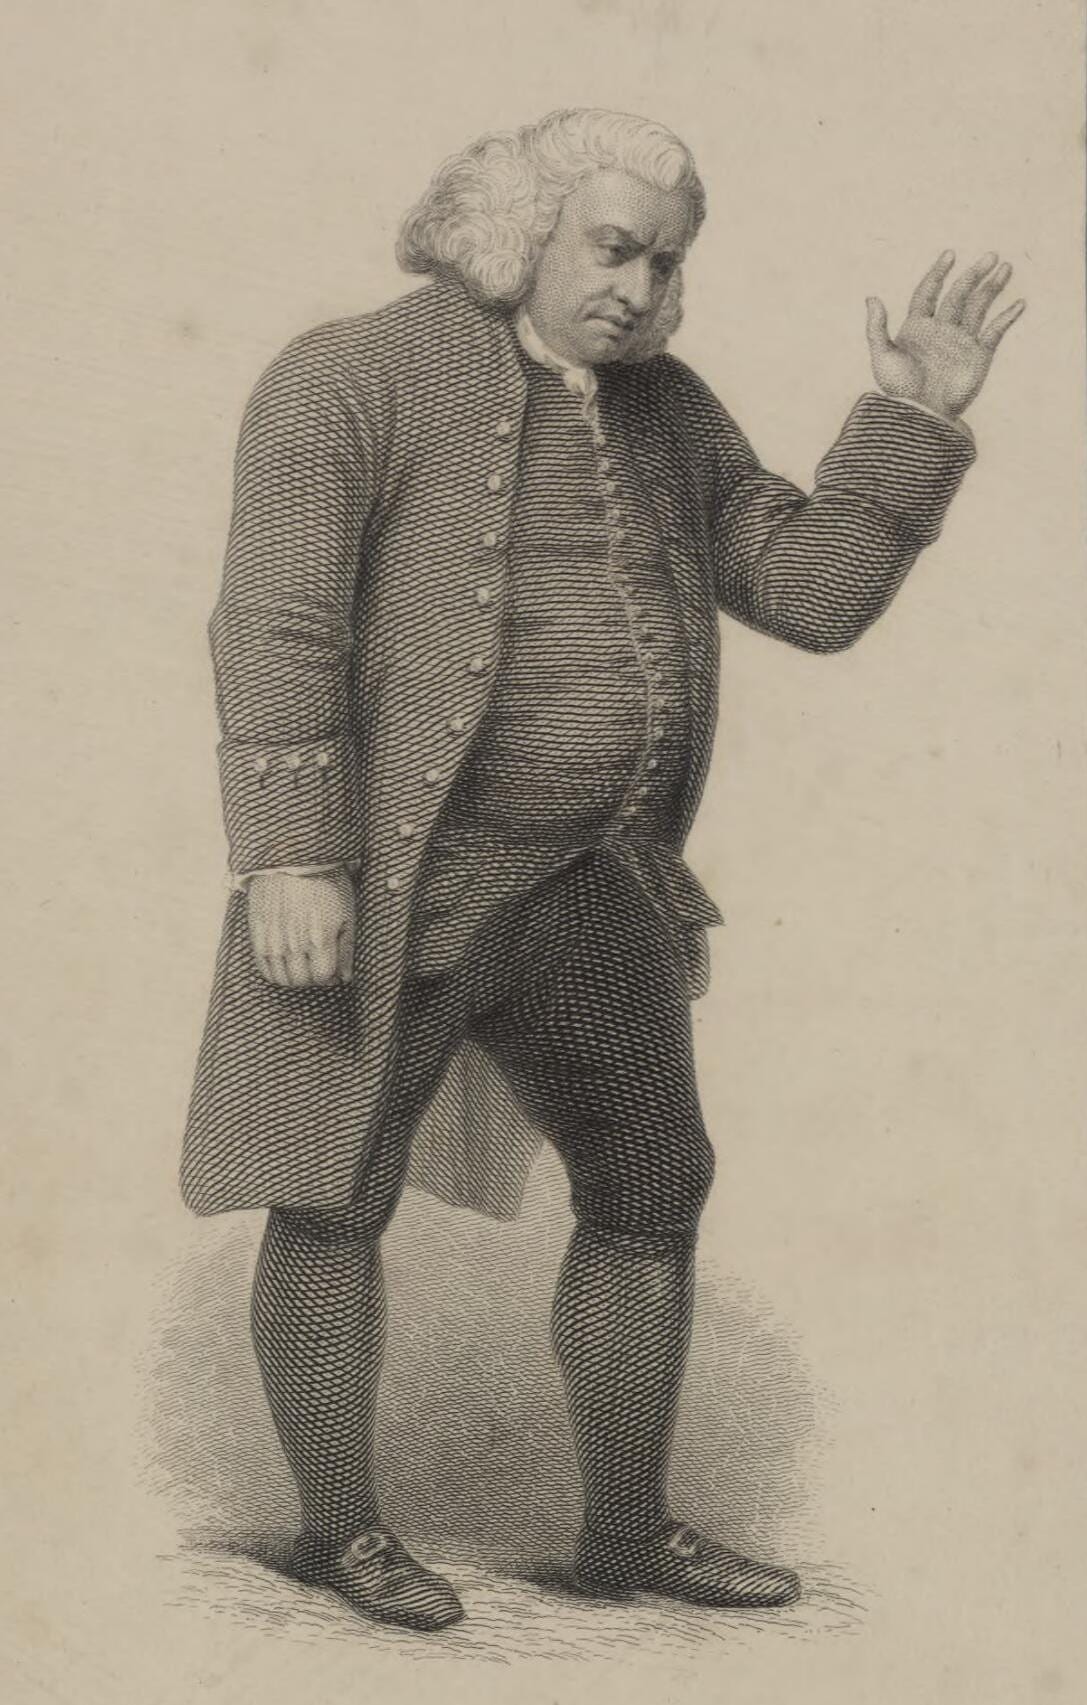 Illustration of Samuel Johnson walking